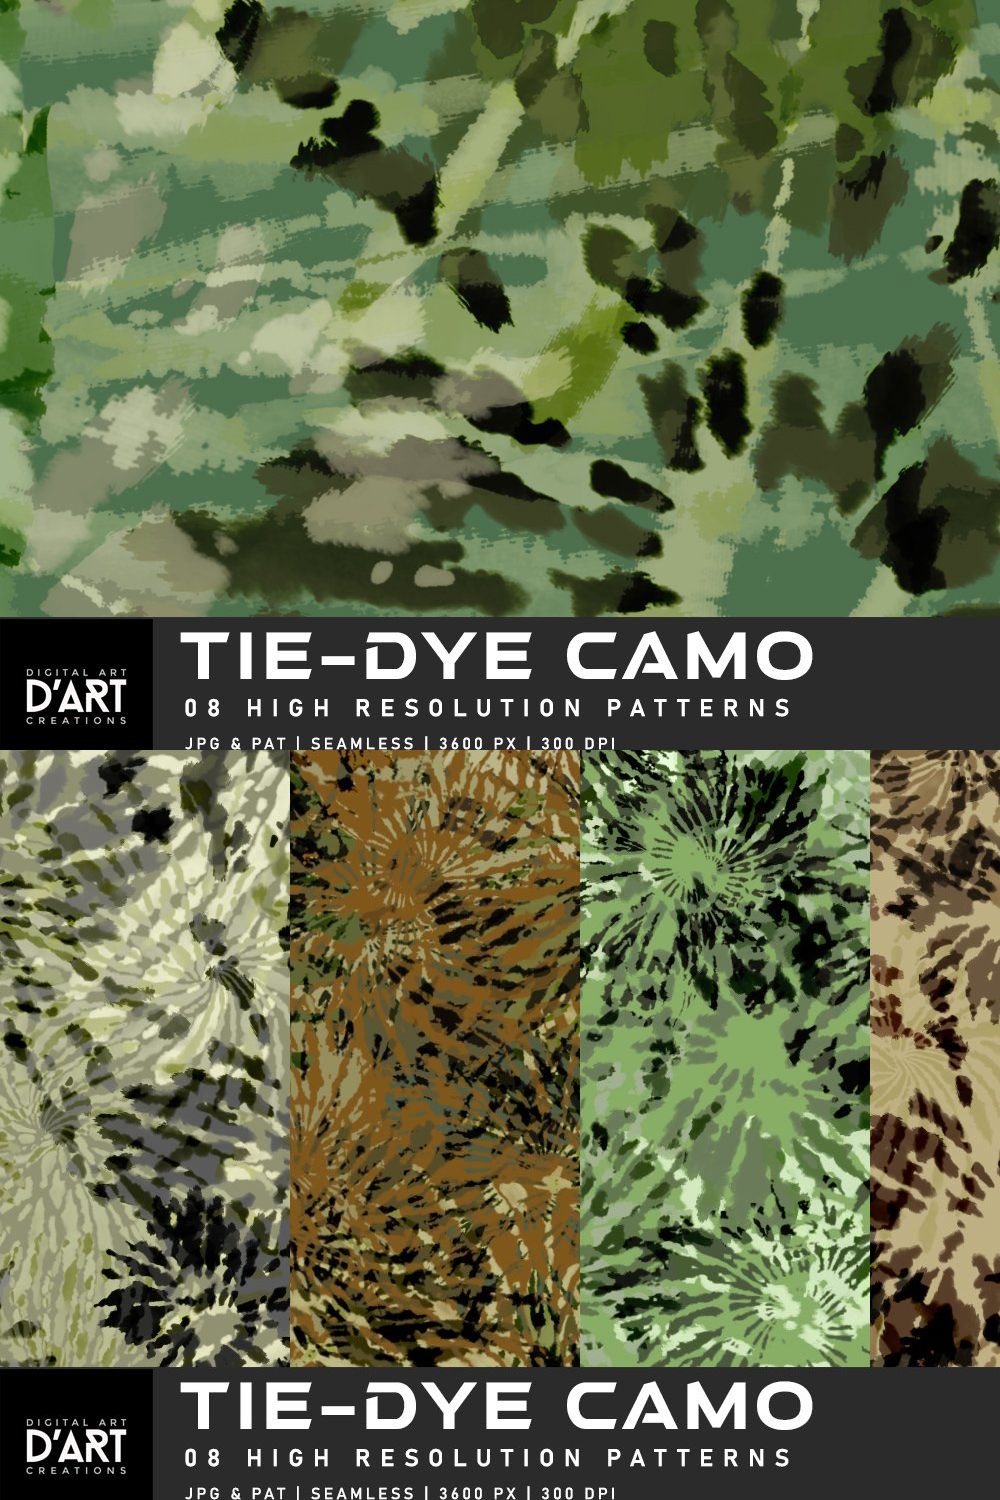 Tie-Dye Camo pinterest preview image.